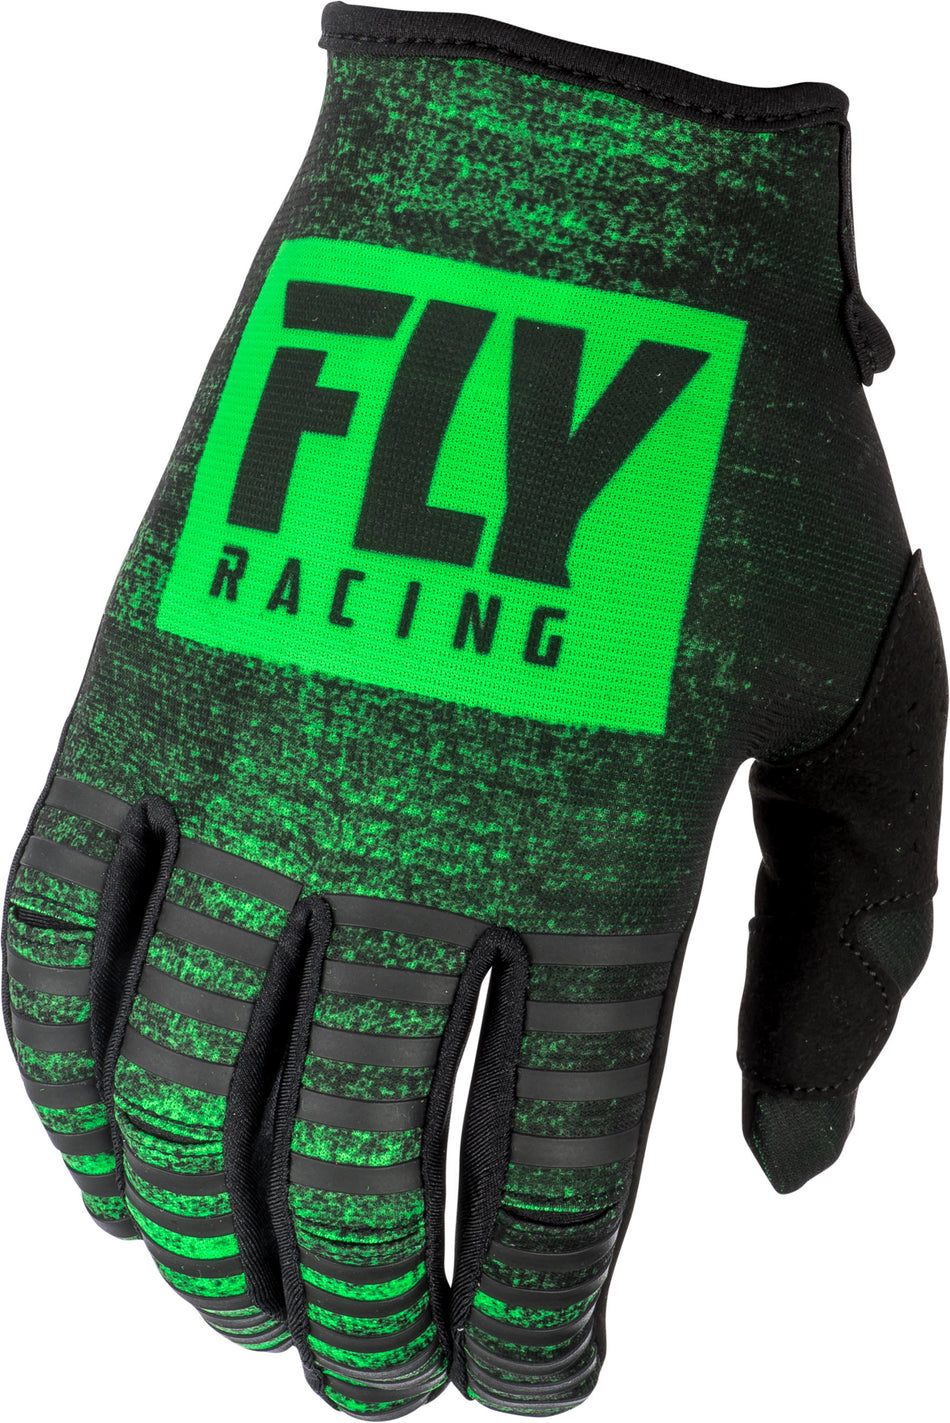 FLY RACING Kinetic Noiz Gloves Neon Green/Black Sz 11 372-51511